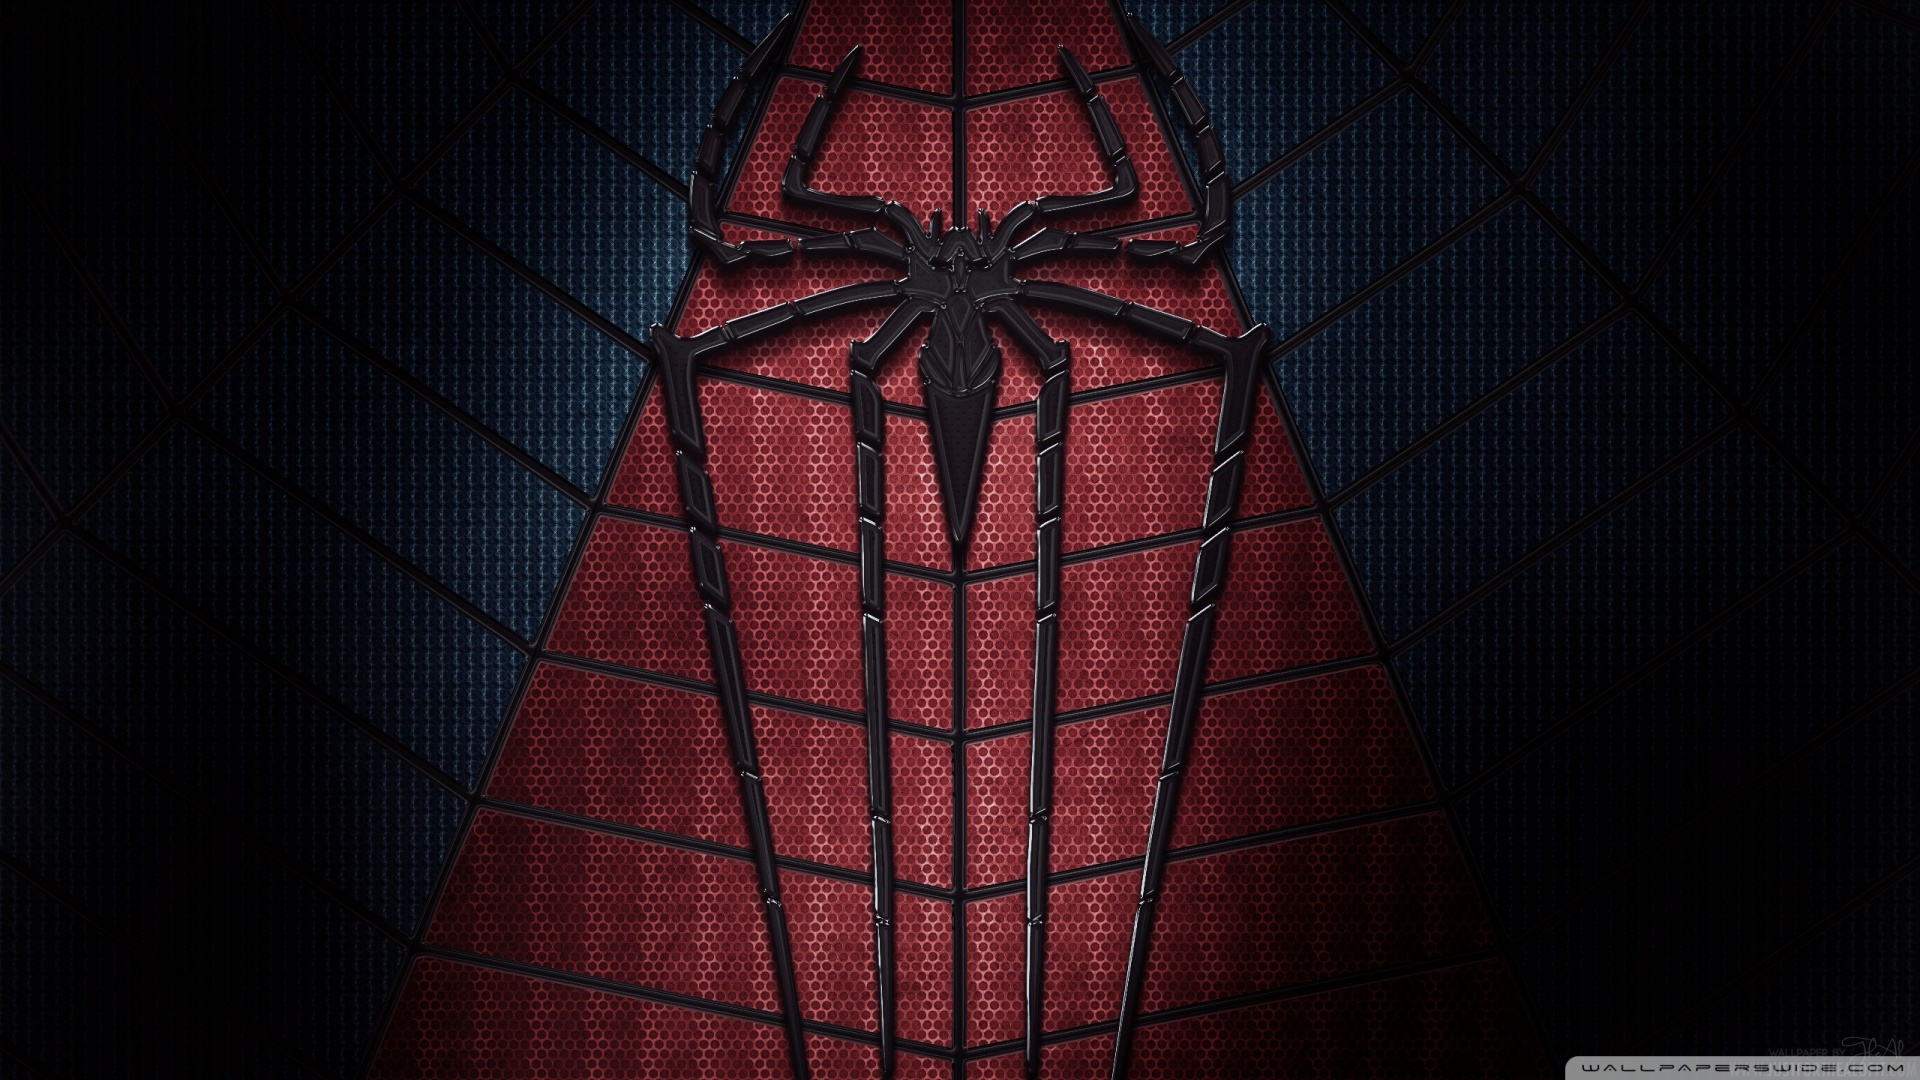 The Amazing Spider Man 2 2014 HD desktop wallpaper High resolution